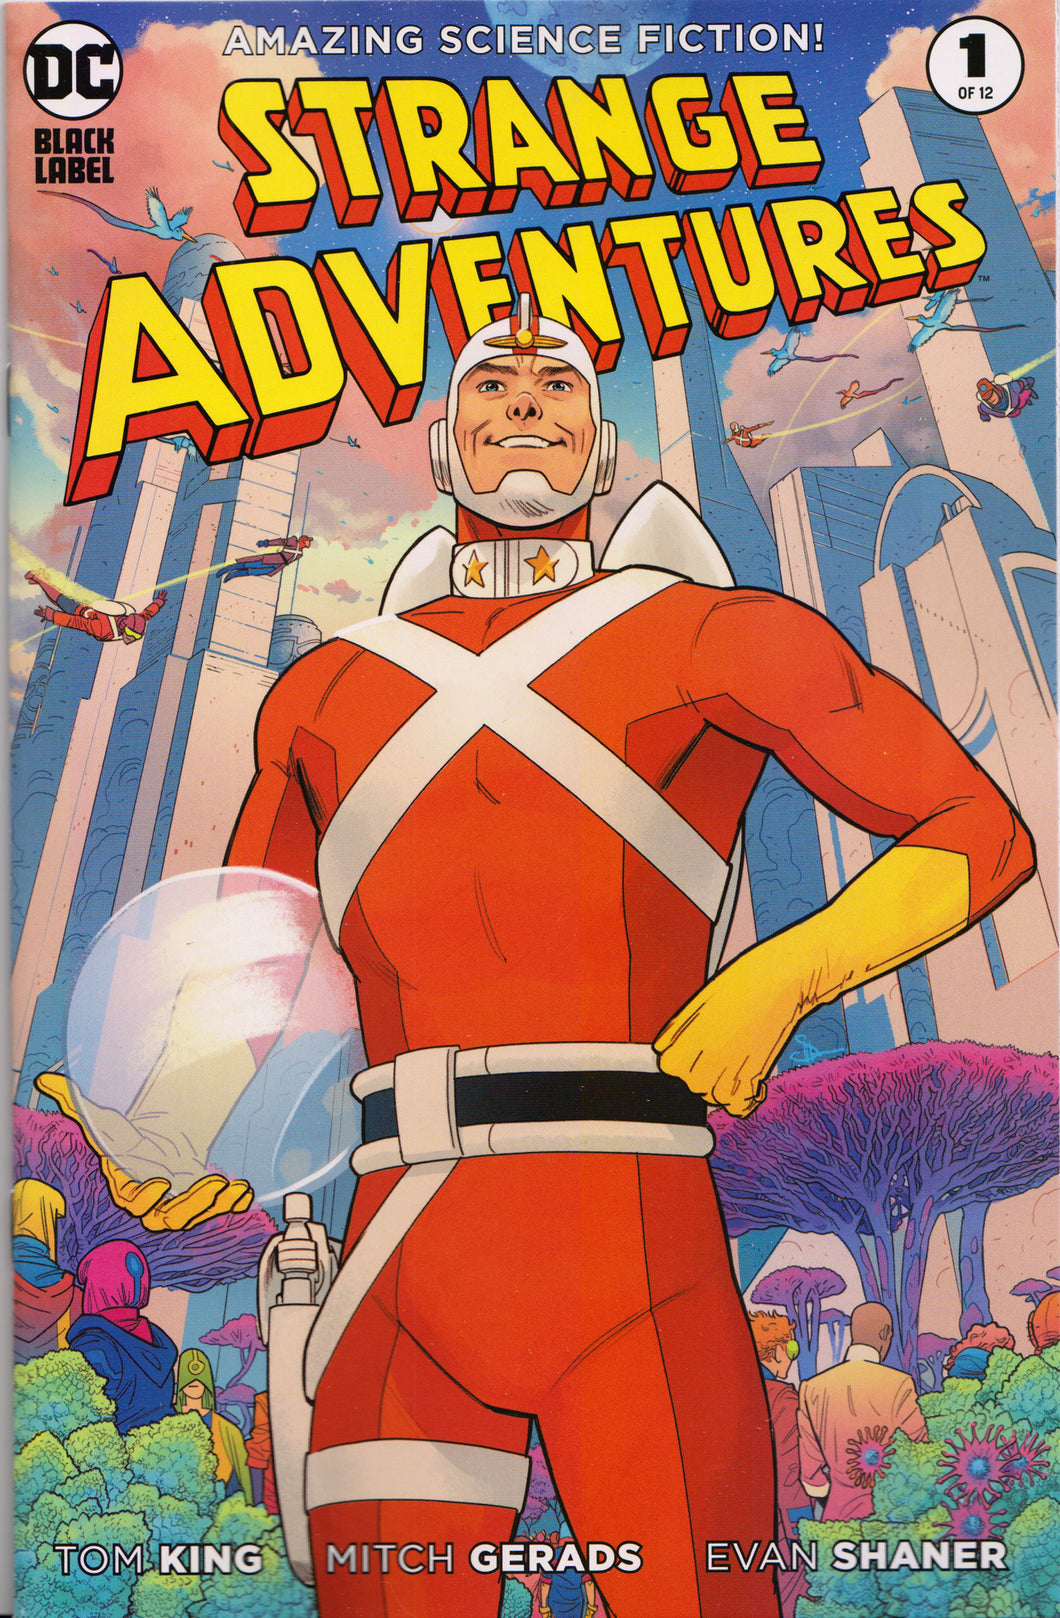 STRANGE ADVENTURES #1 (2ND PRINT) Comic Book ~ Tom King & Mitch Gerads ~ DC